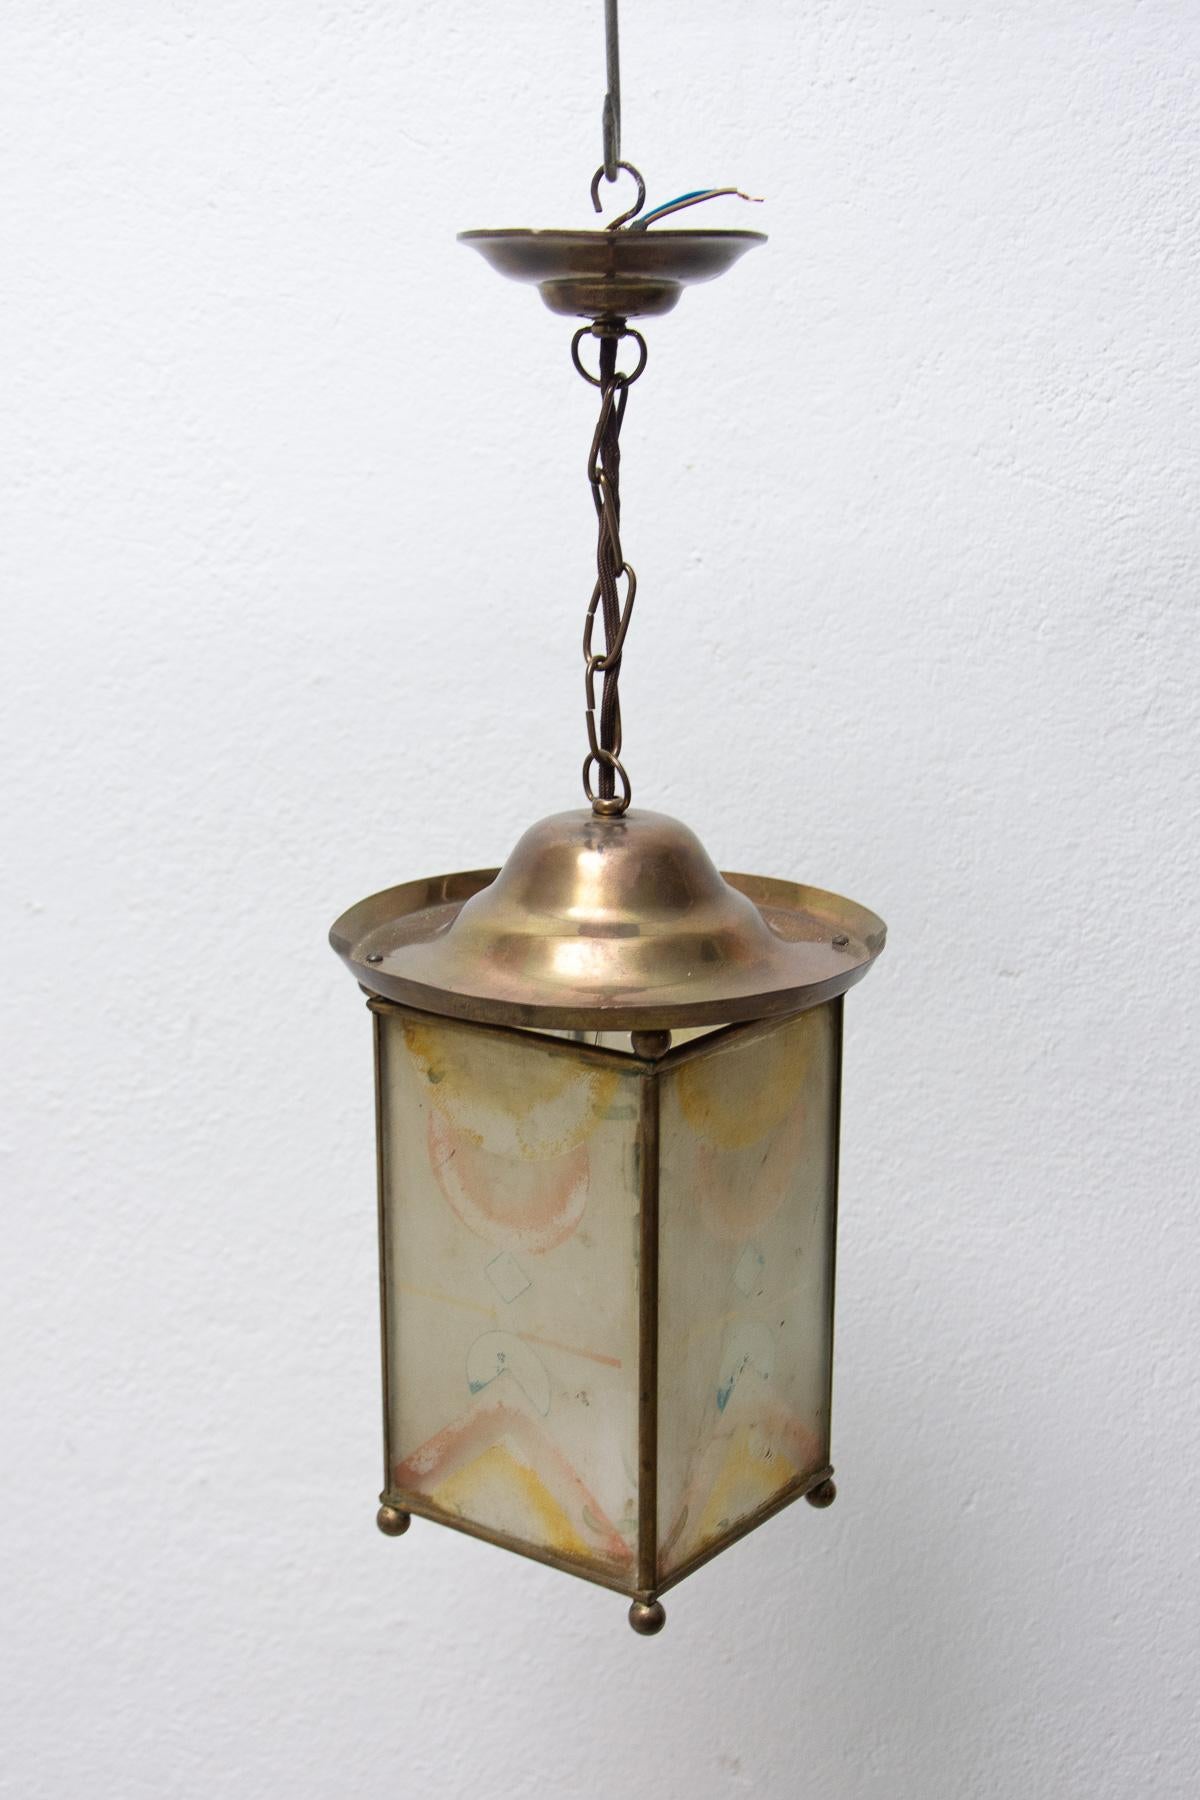 20th Century Art Nouveau Lantern, circa 1915, Austria Hungary